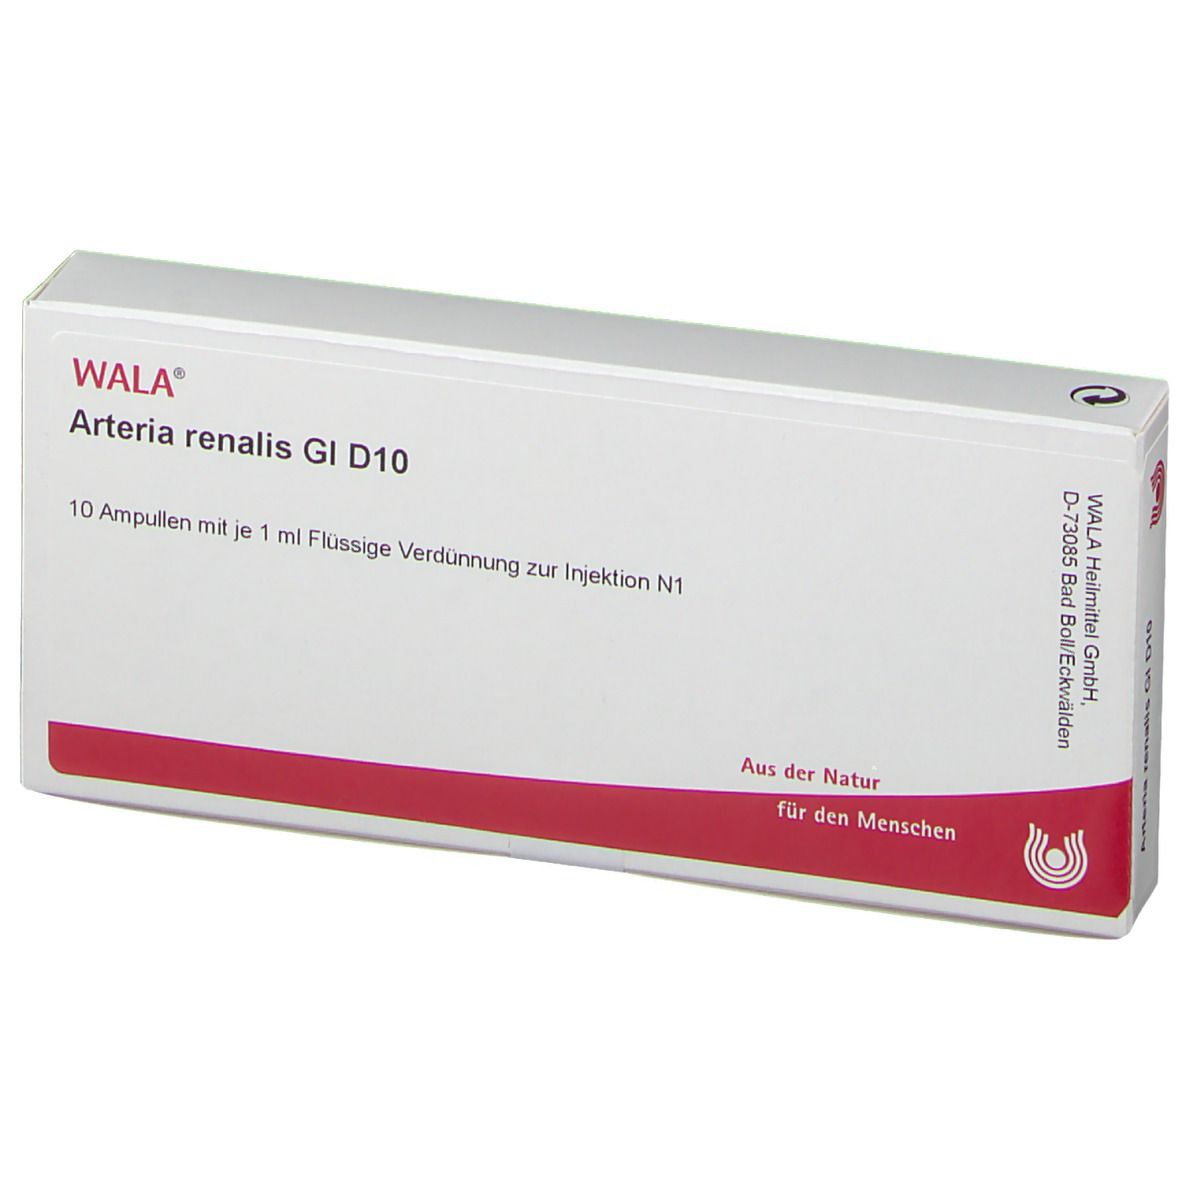 WALA® Arteria renalis Gl D 10